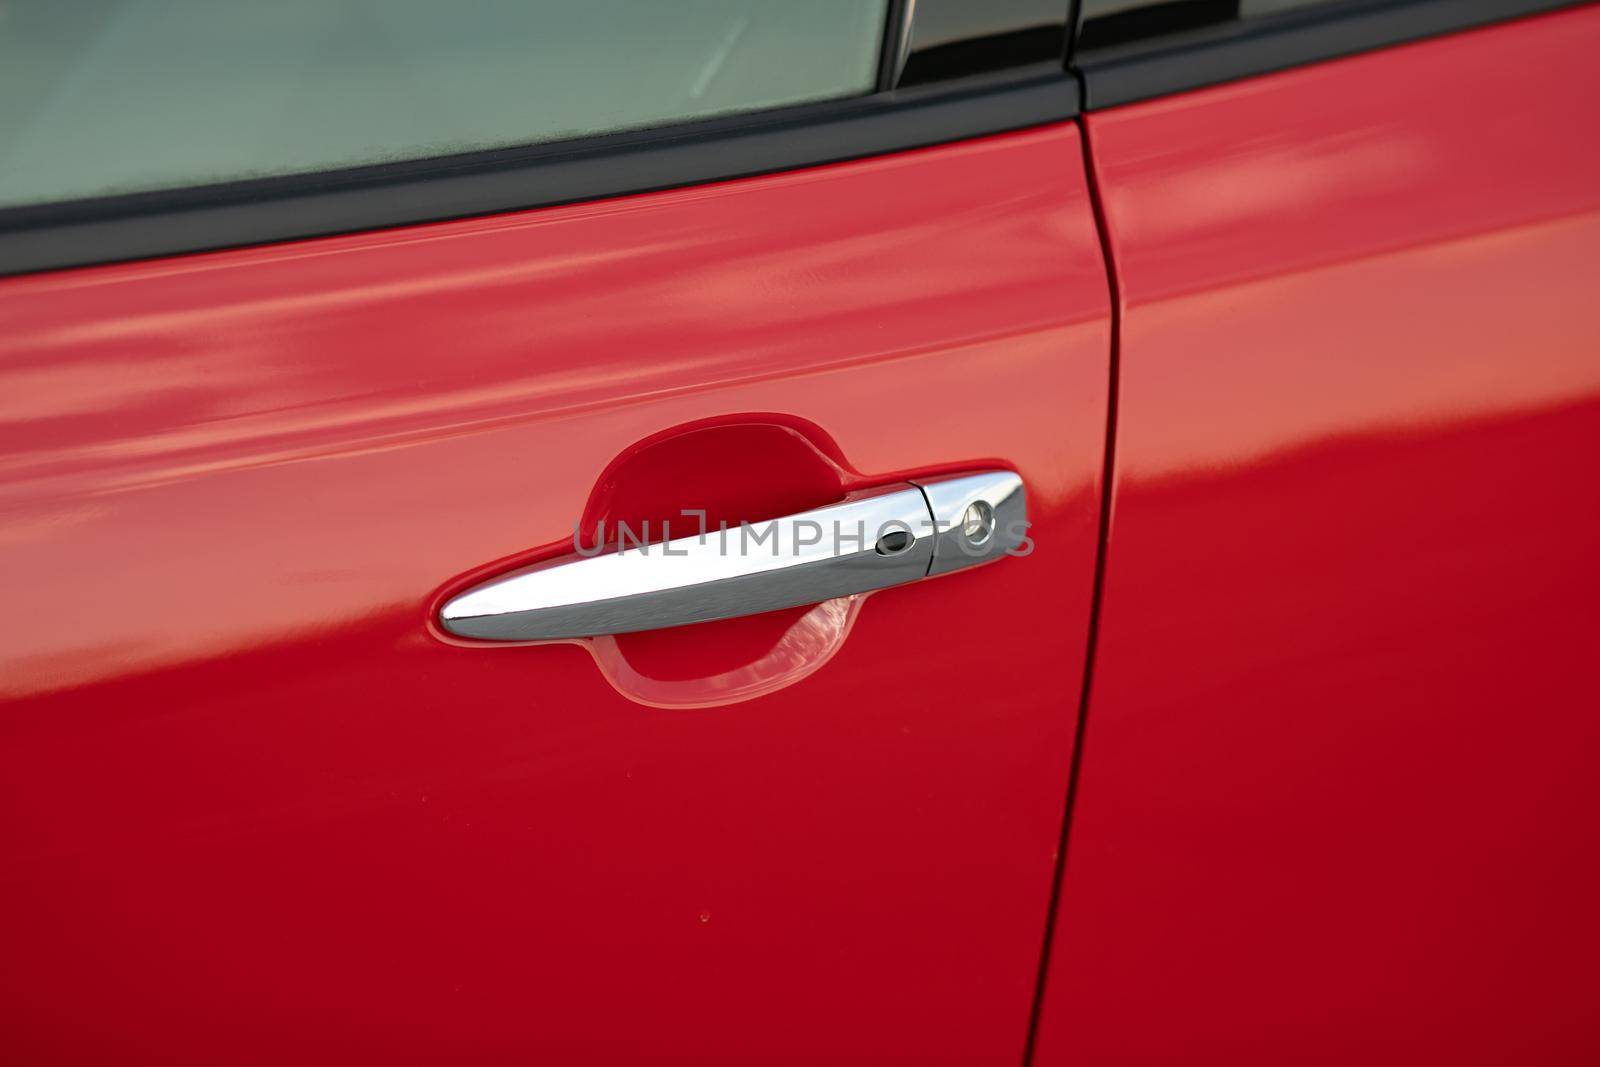 Modern technology to unlock car doors by uflypro